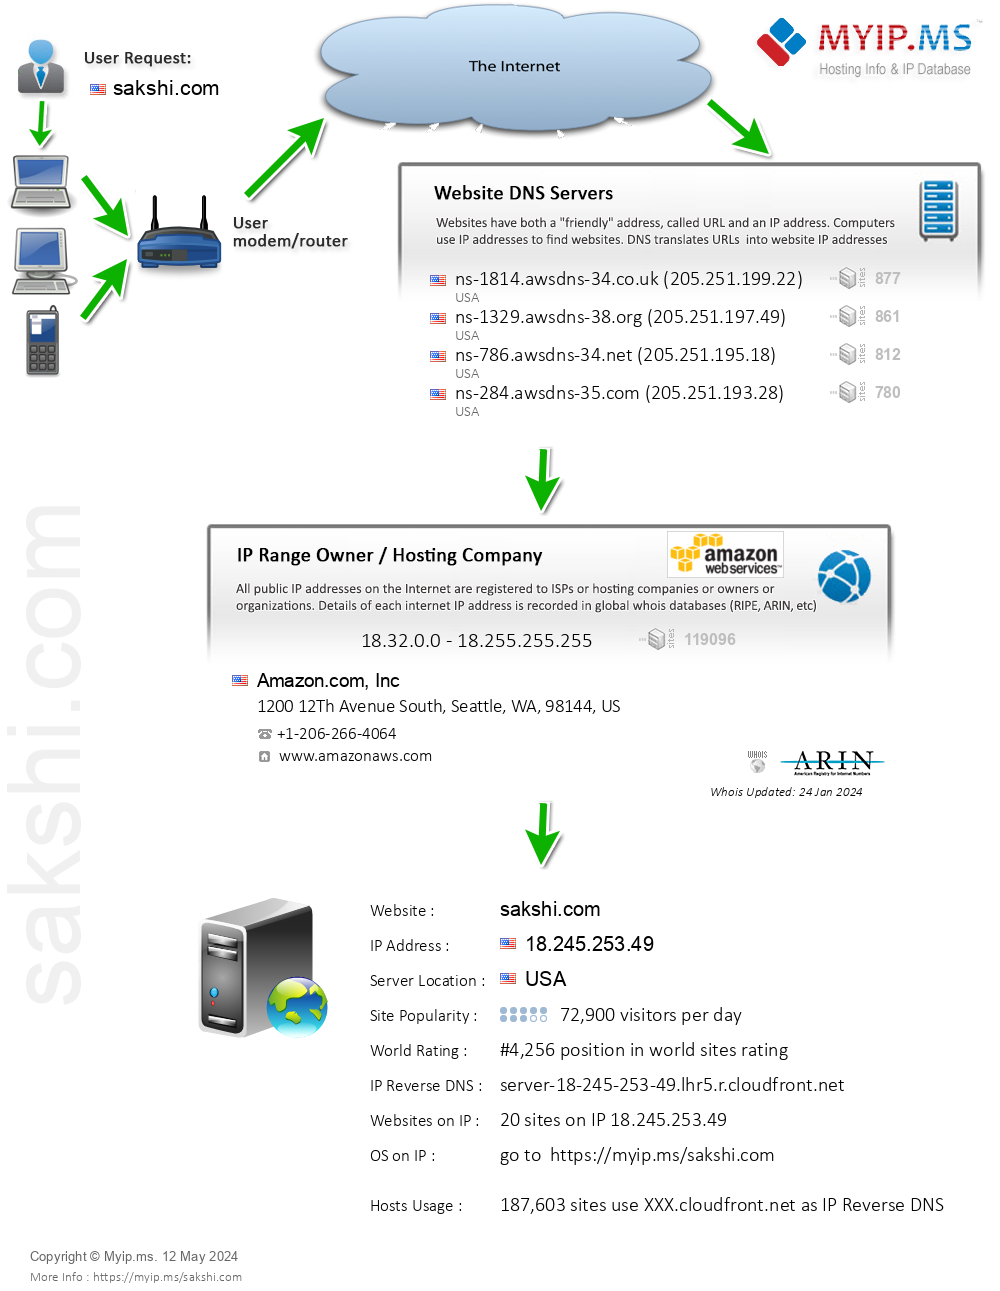 Sakshi.com - Website Hosting Visual IP Diagram